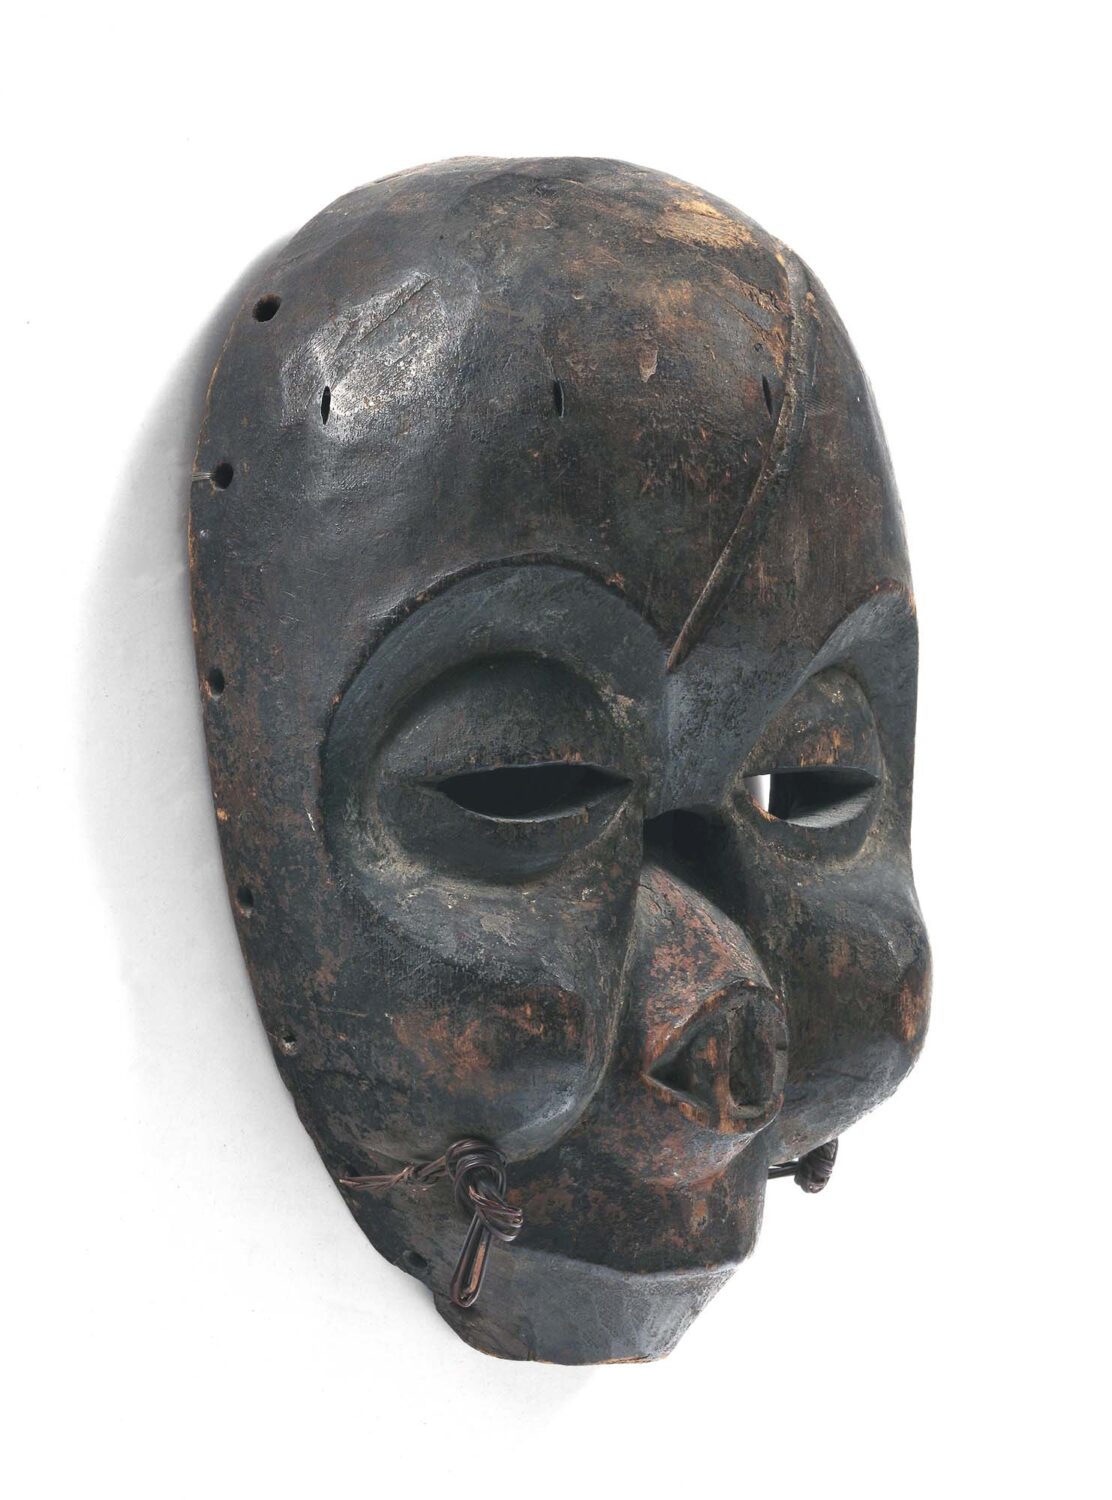 thumbnail of Ekpo Society mask with head slash, missing nose.